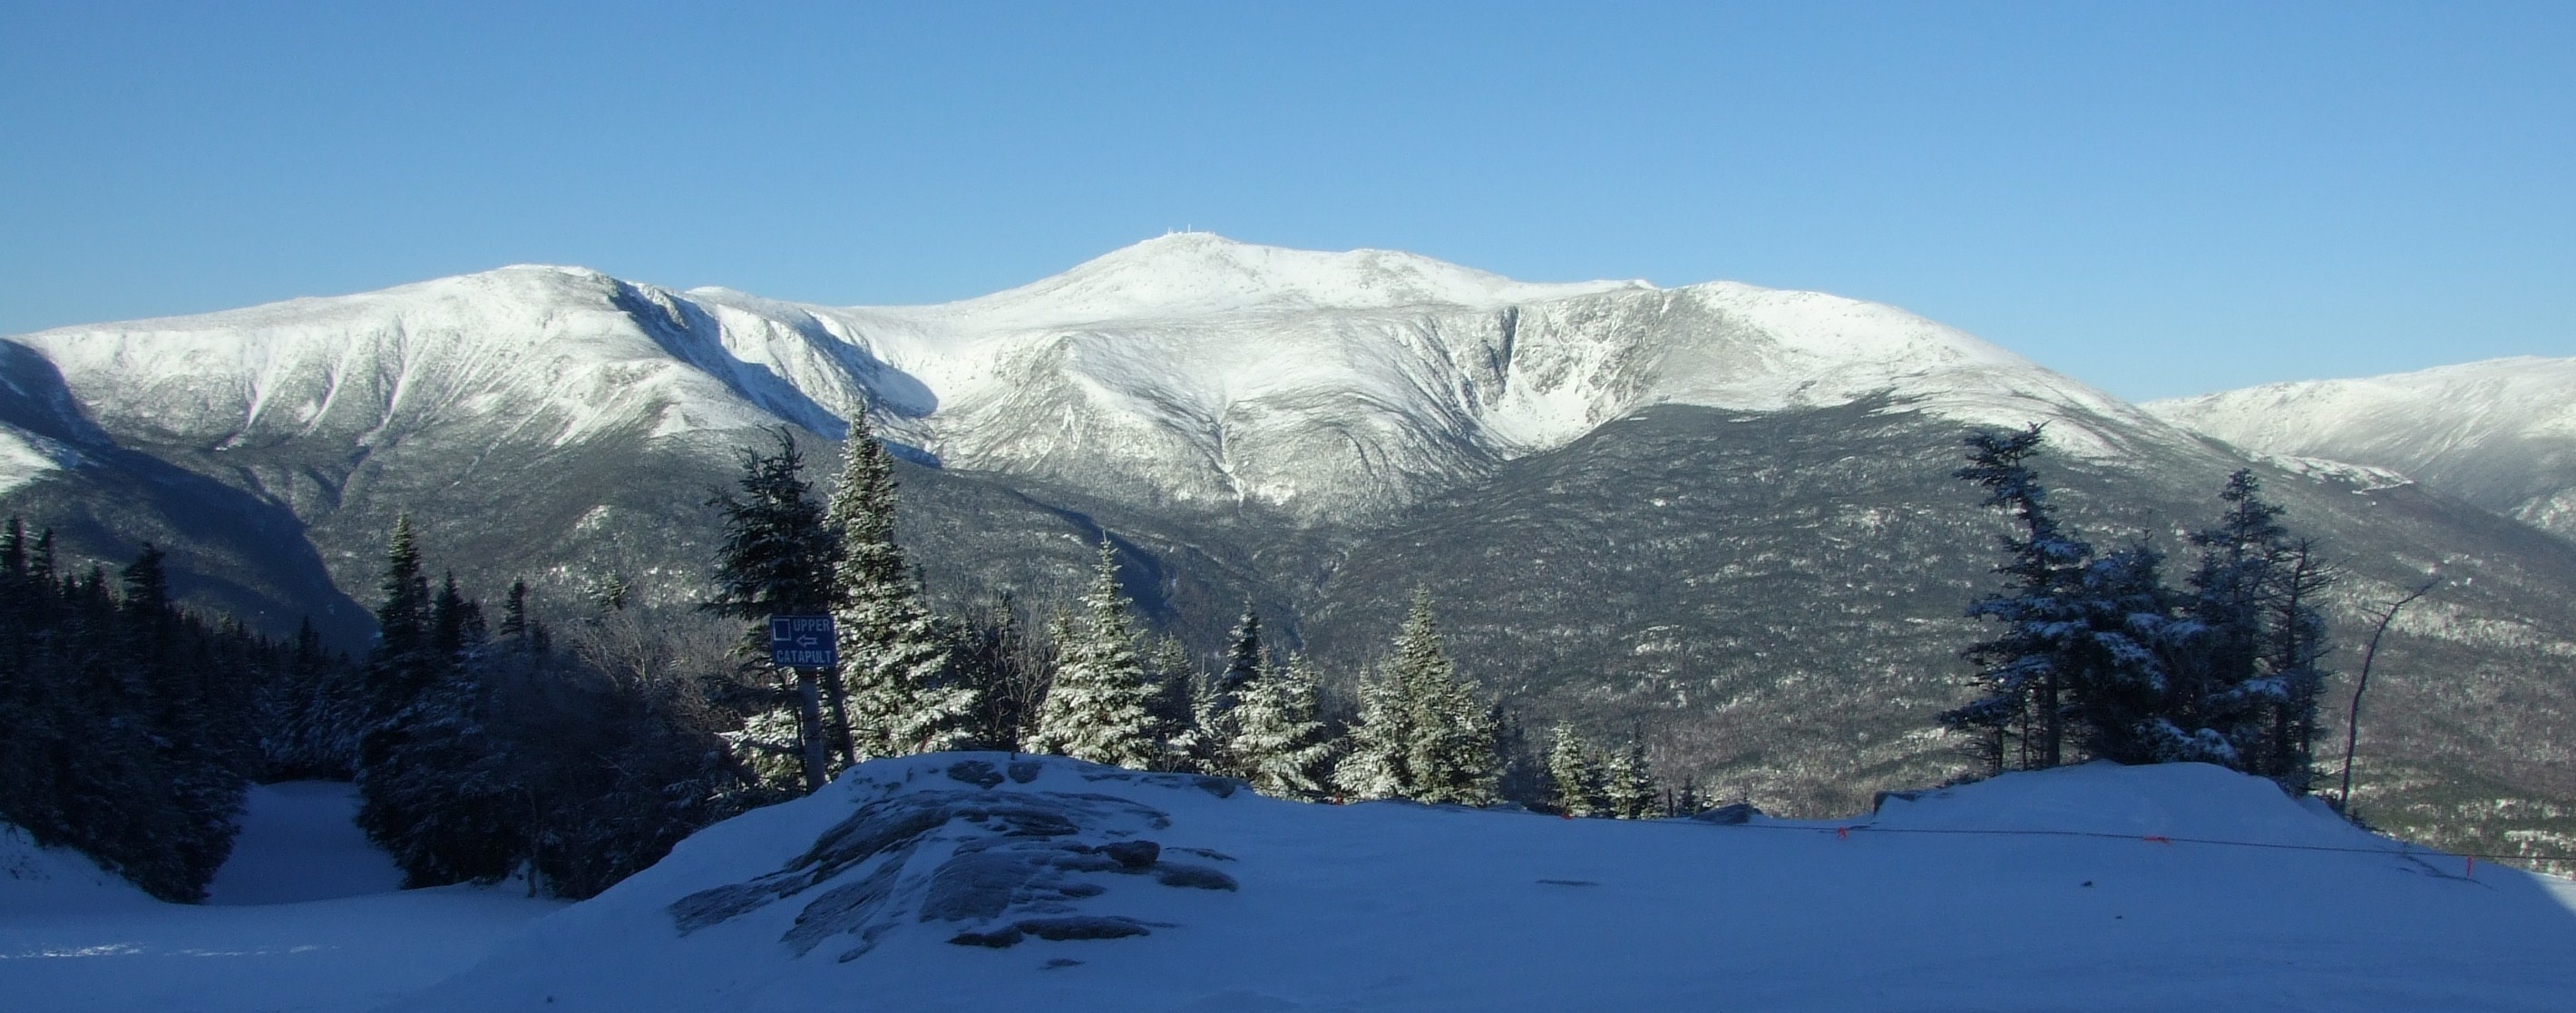 Mount Washington (New Hampshire), White Mountain National Forest, Landmarks, New Hampshire, 2840x1120 Dual Screen Desktop